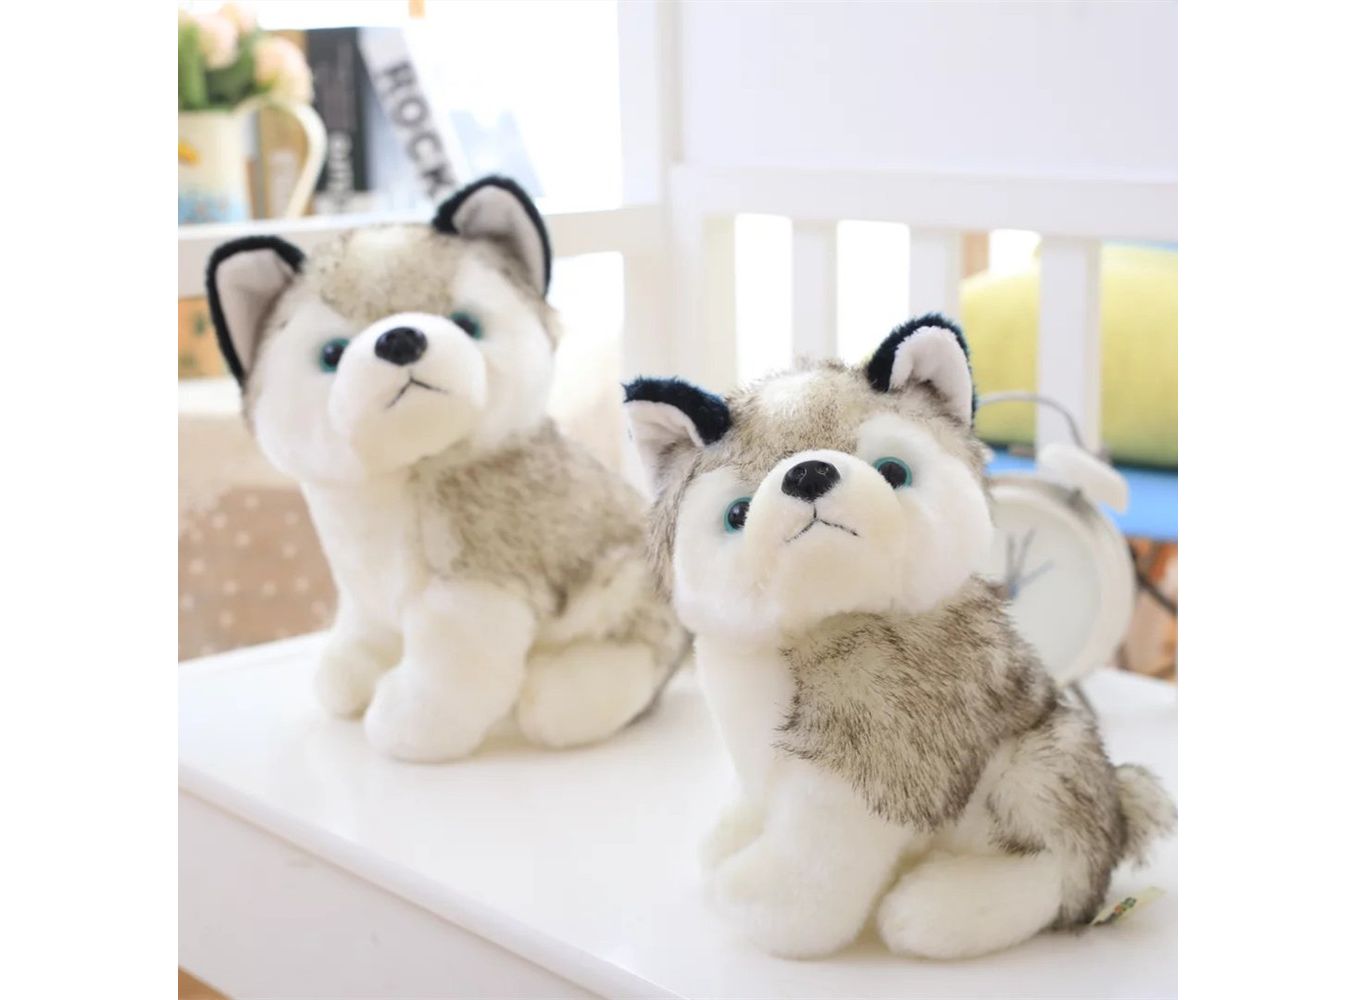 https://protechshop.co.uk/images/thumbnails/1357/1000/detailed/89/Lifelike-Plush-Husky-Dog-Toys-For-Children-Stuffed-Animal-Puppy-Baby-Toys-Realistic-Husky-Doll-Kids.jpg